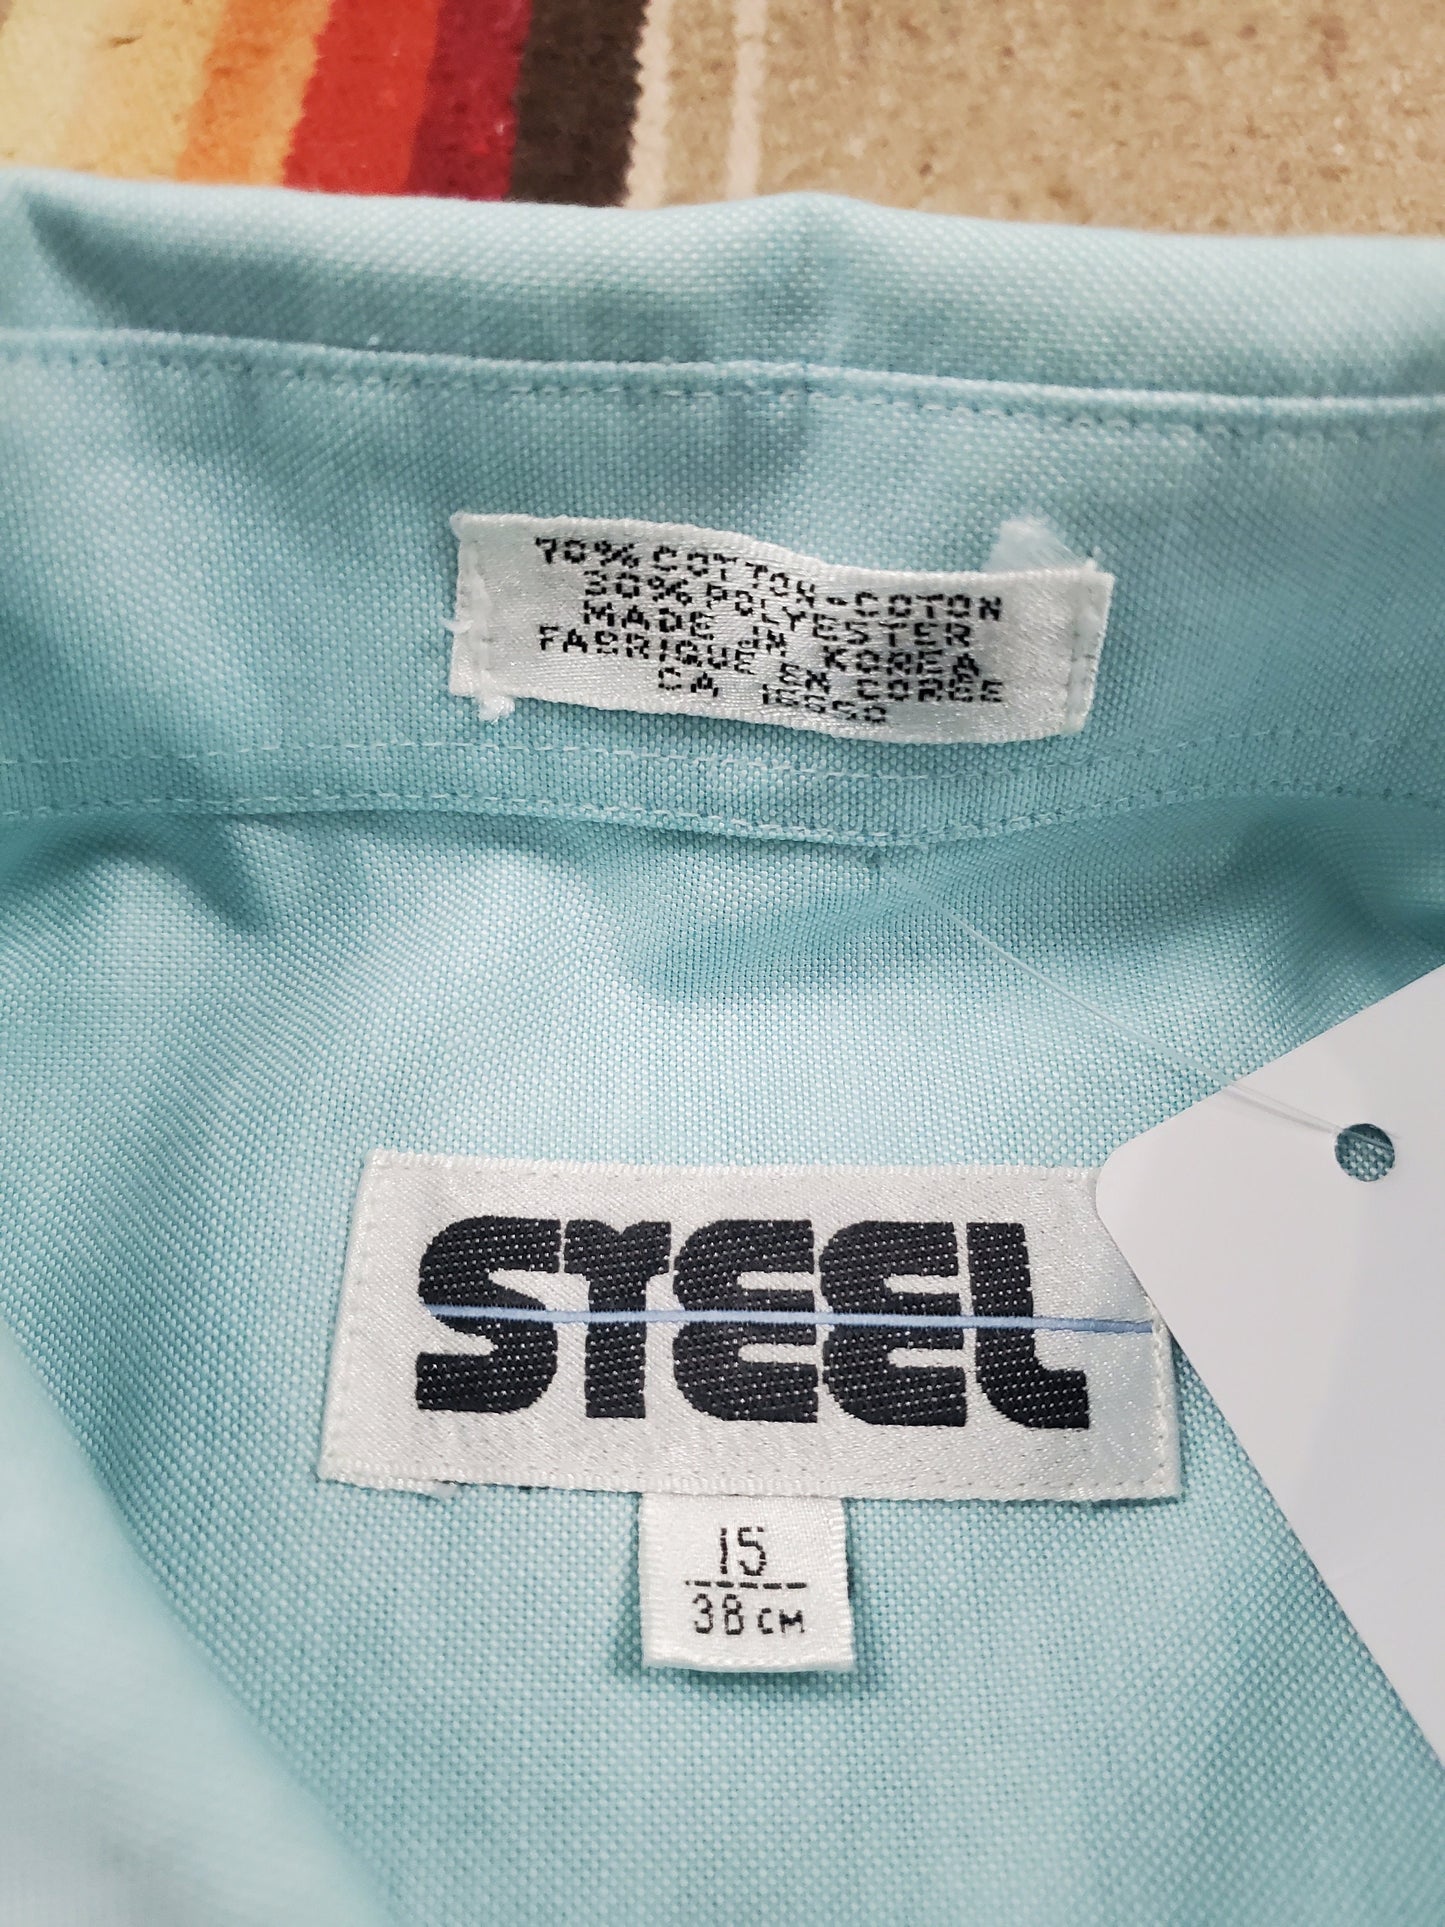 1980s Steel Button Down Shirt Size M/L